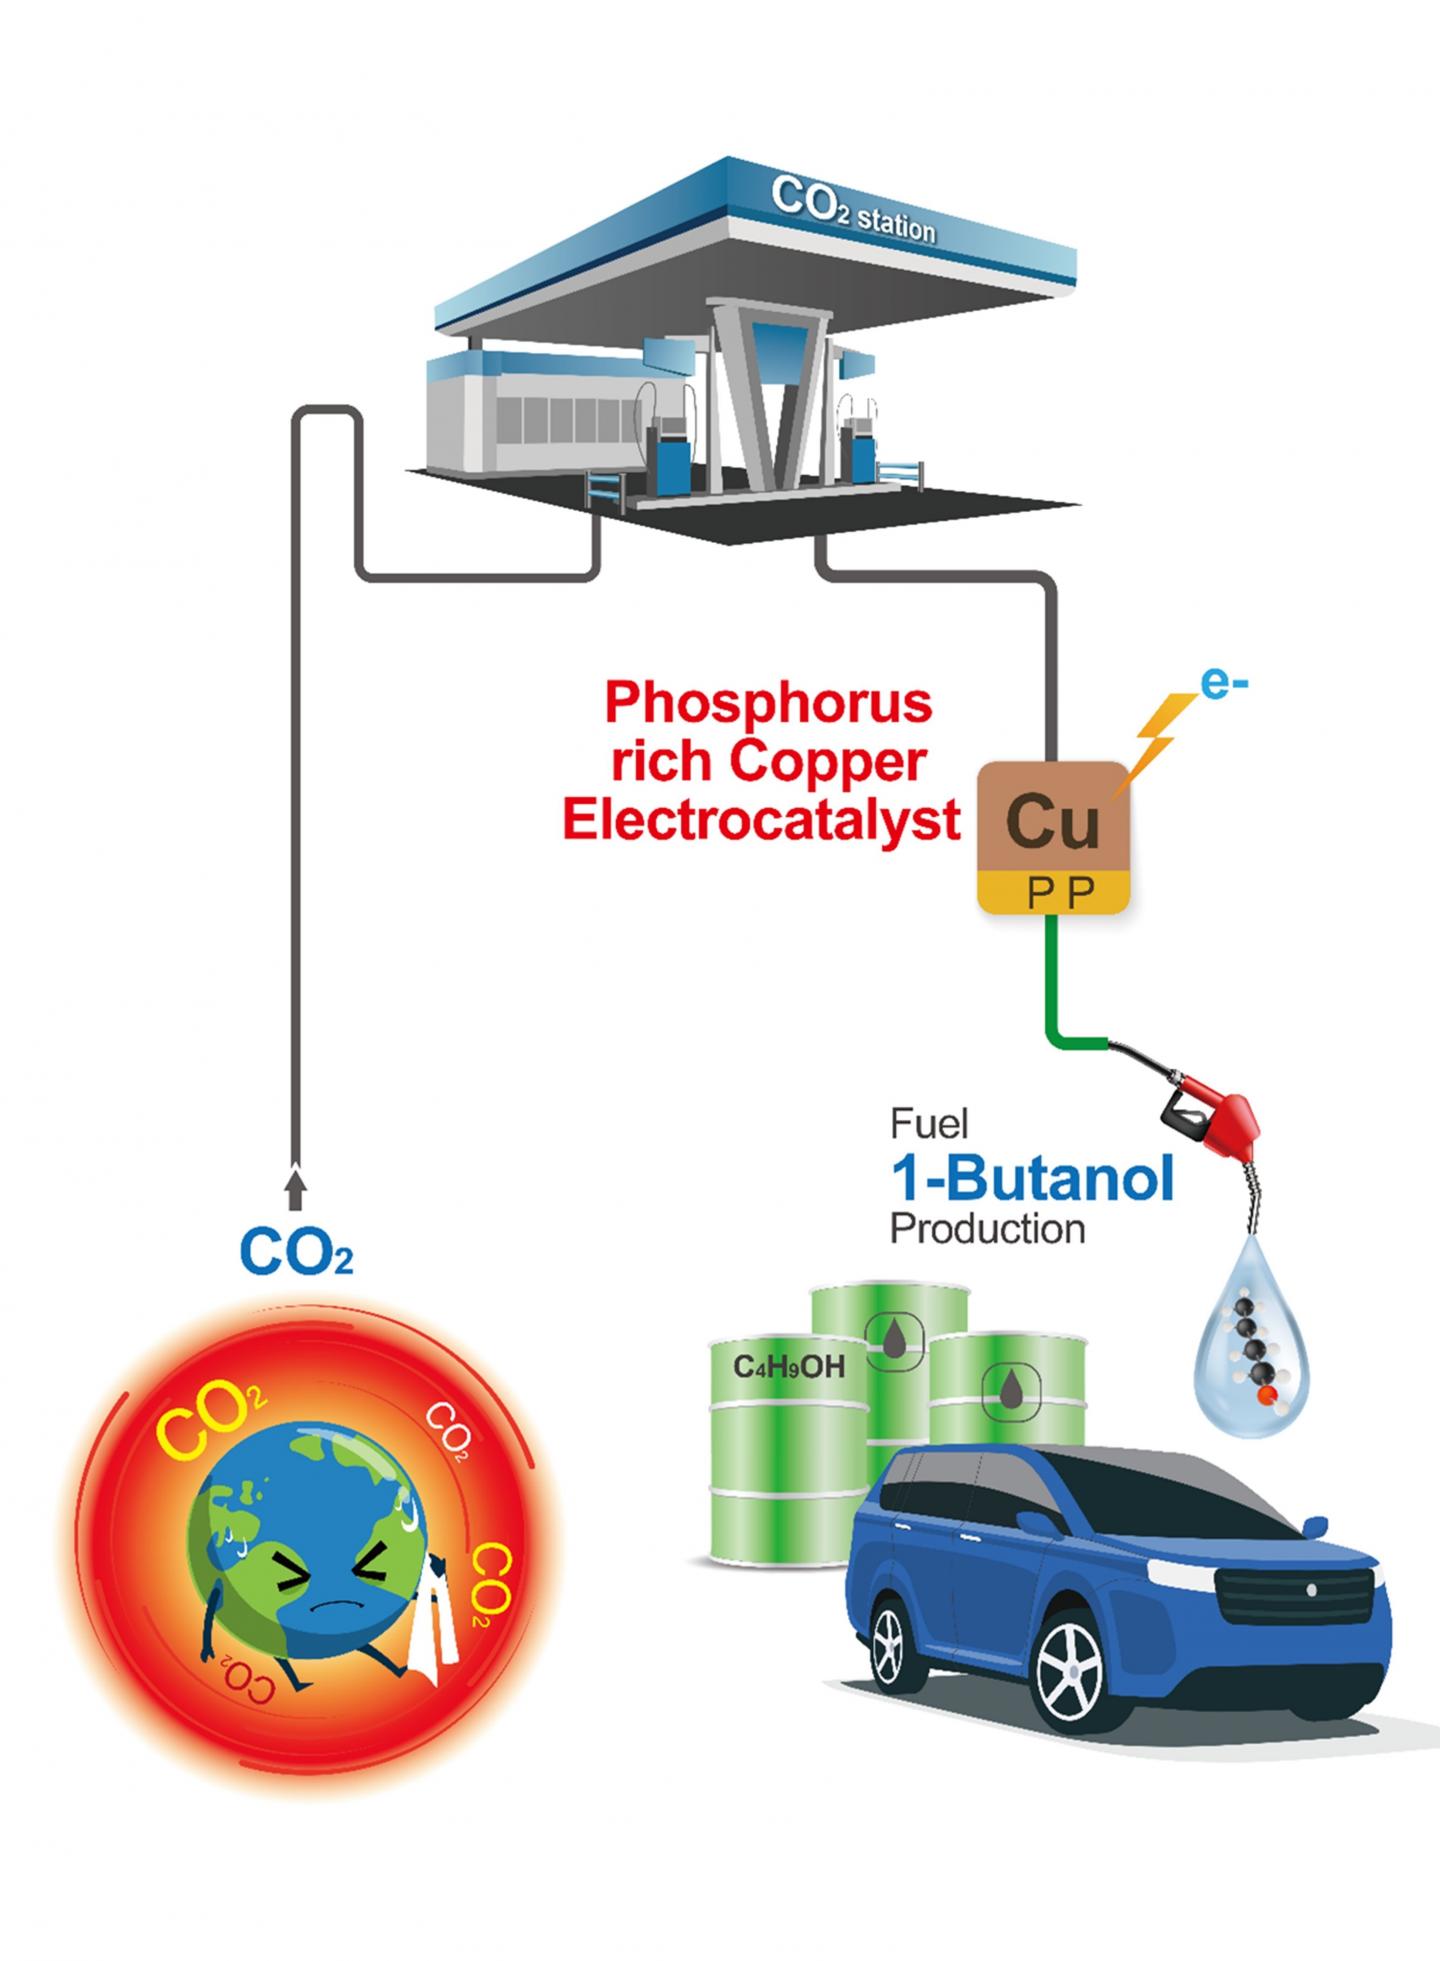 Ways to convert CO2